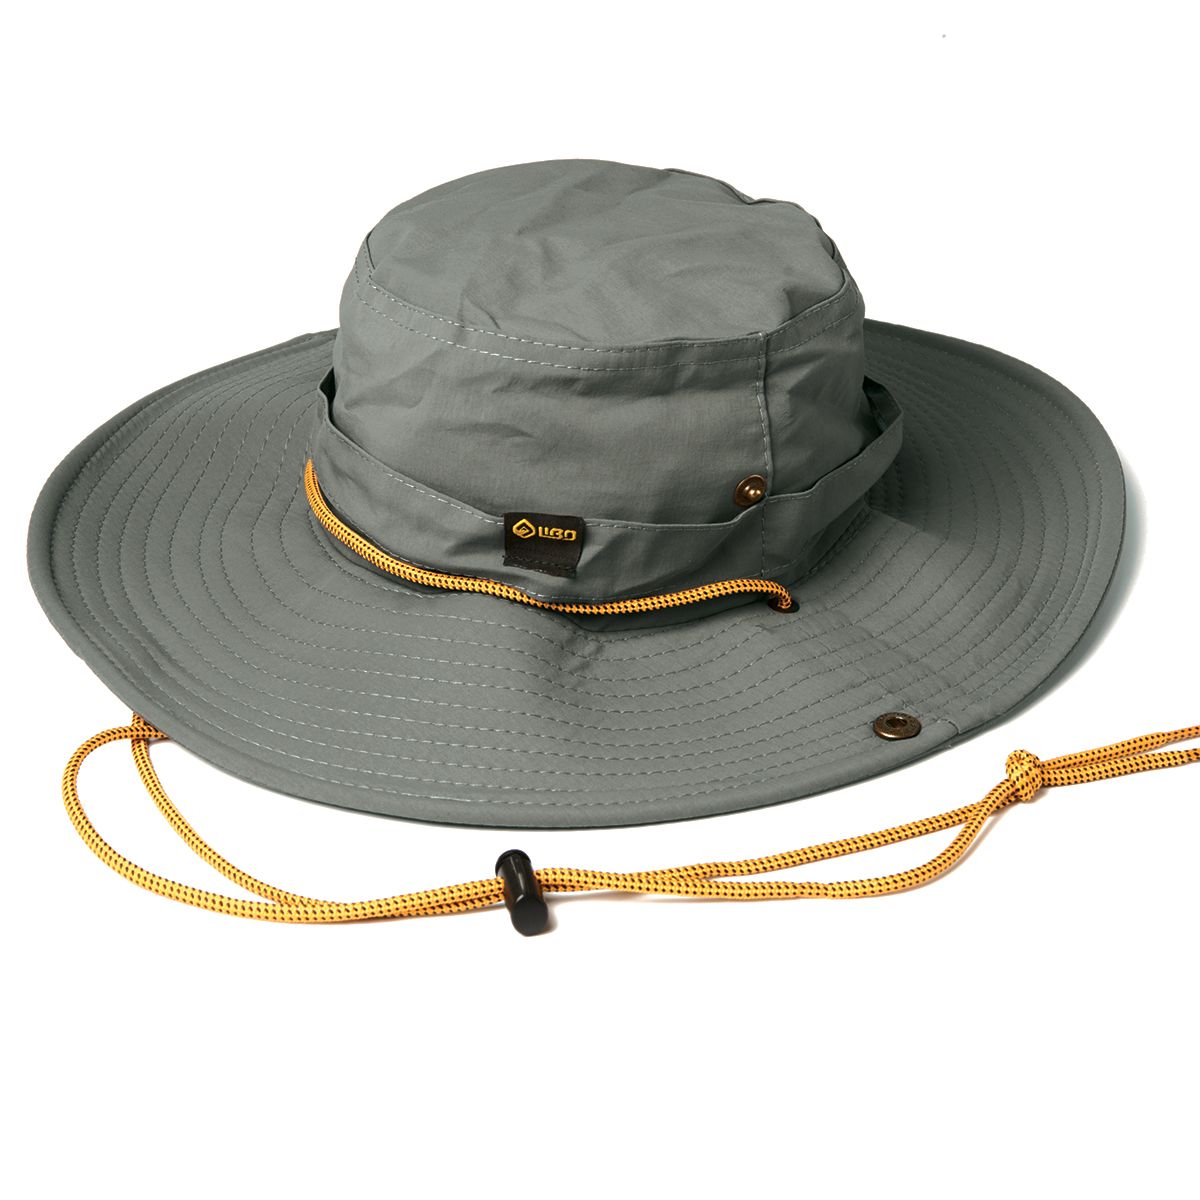 Libo Atacama Sombrero Australiano